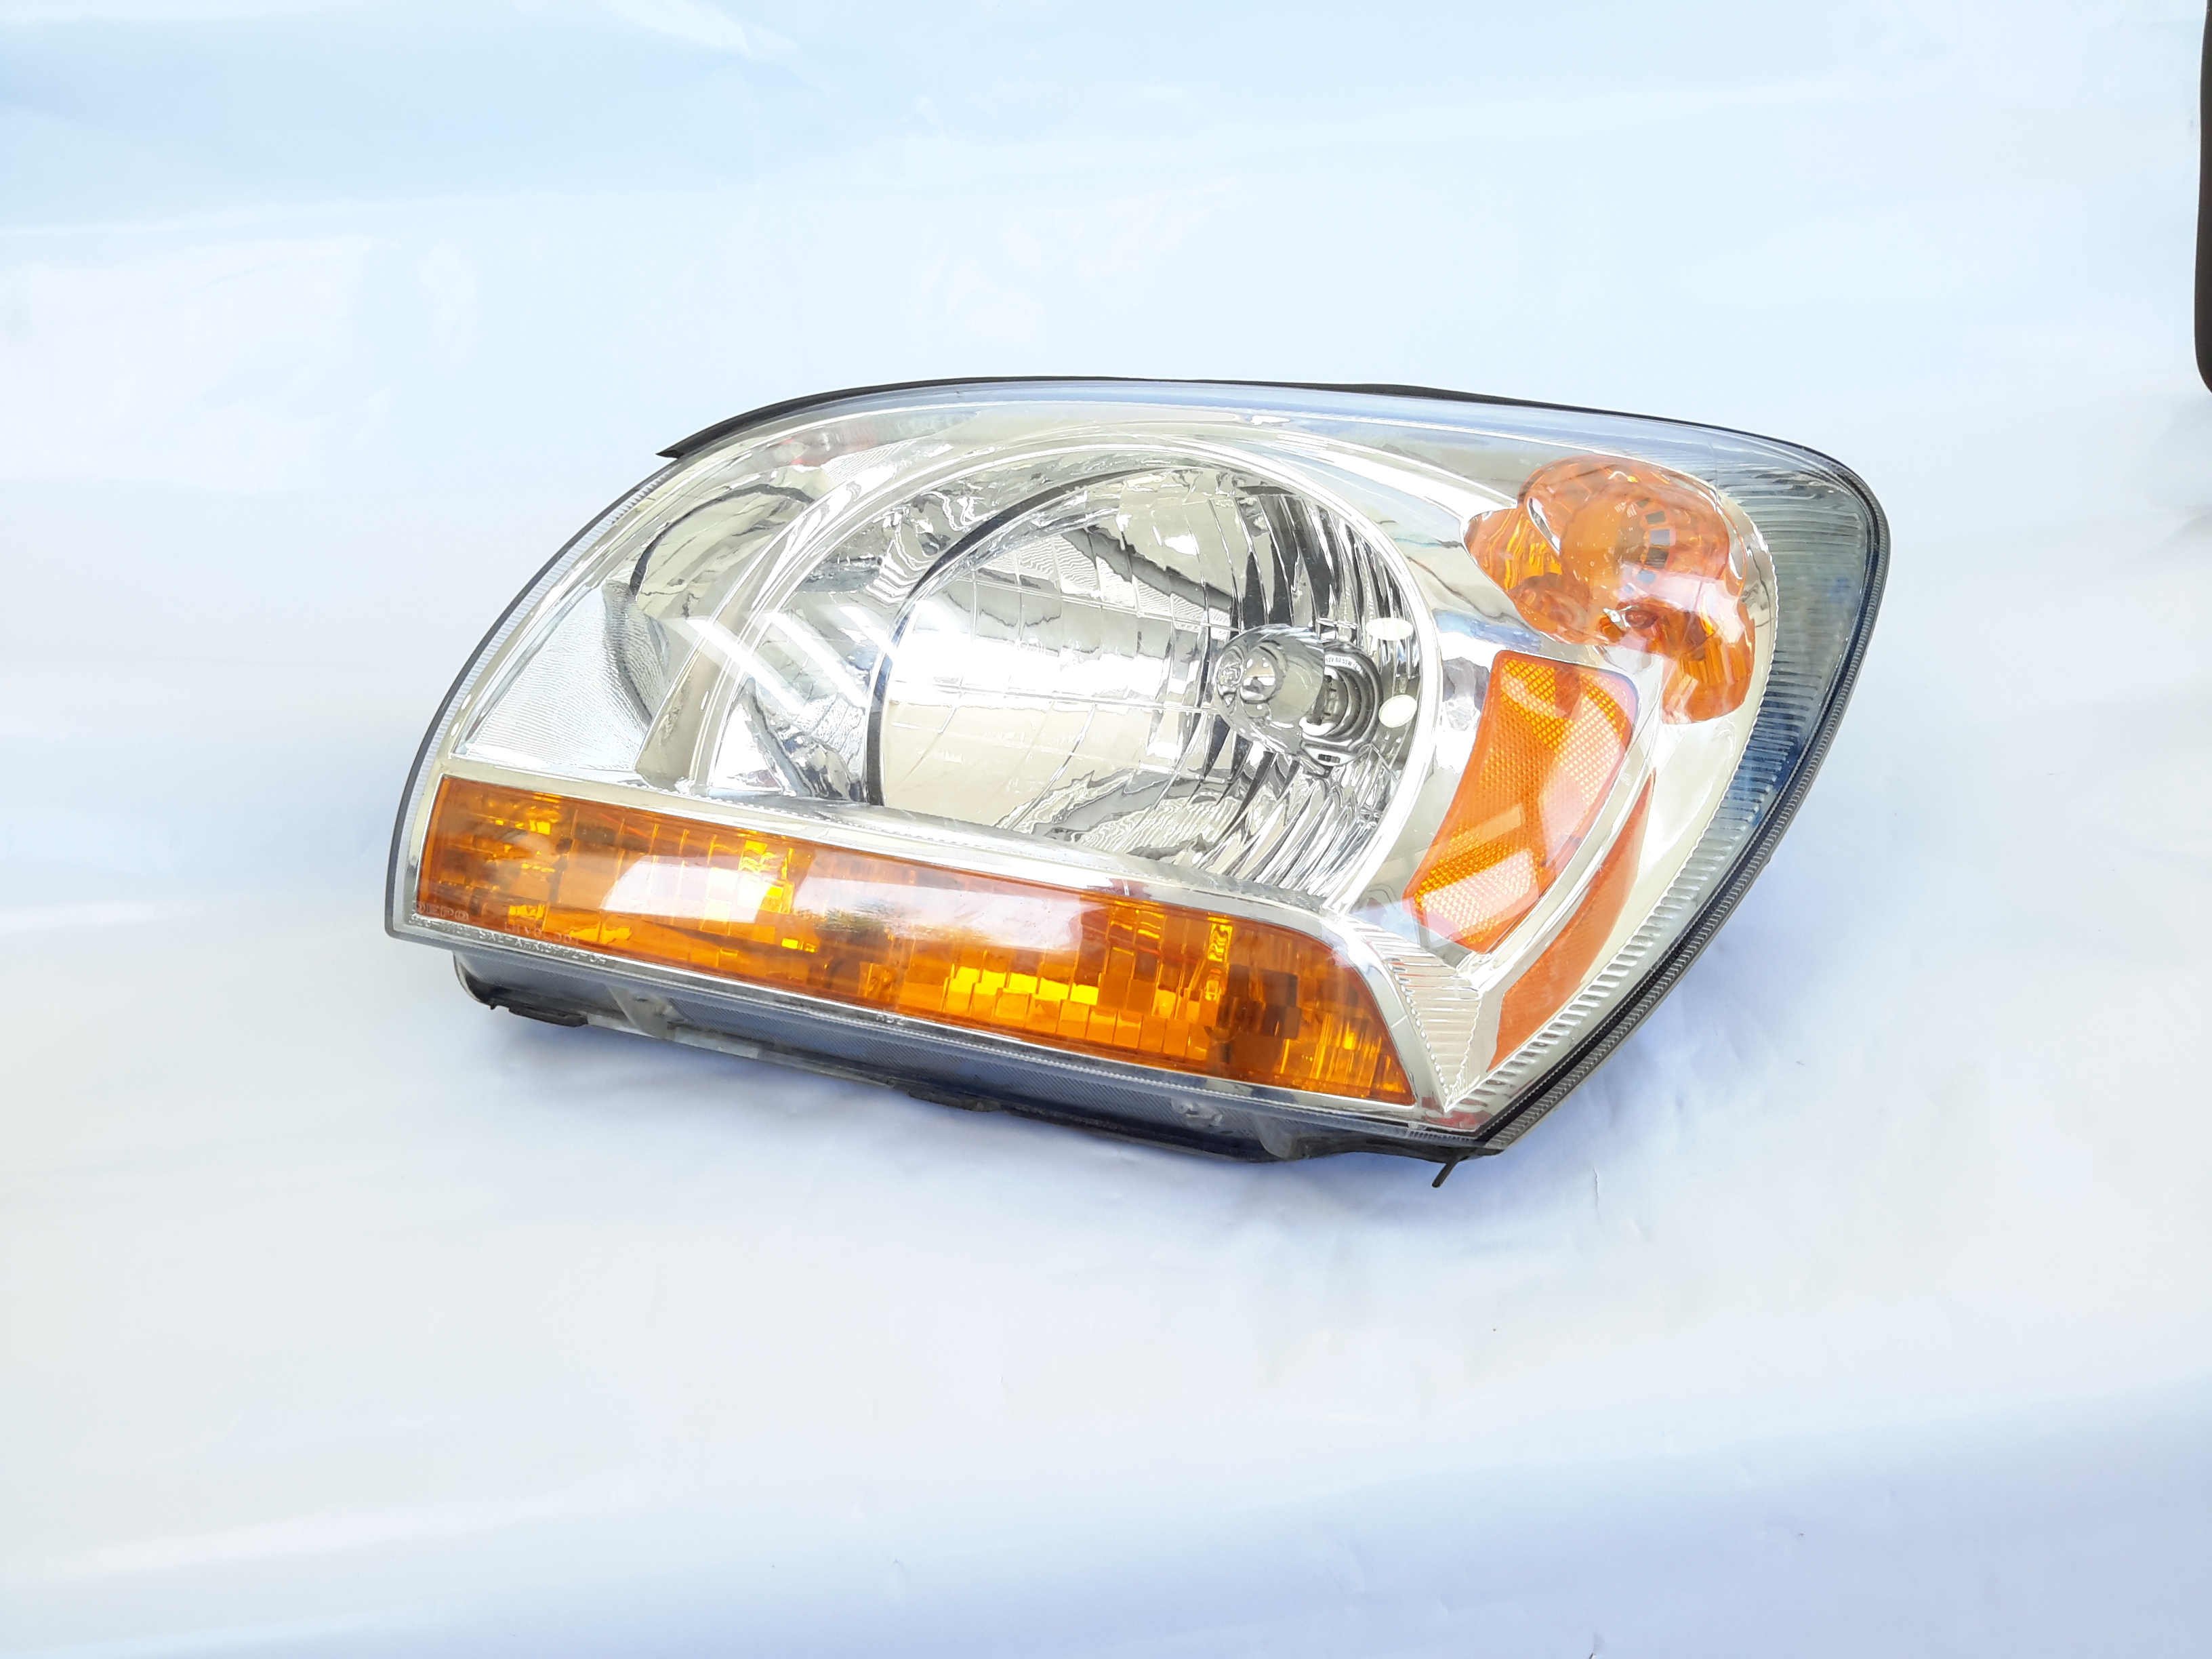 Kia sportage 2008 headlight (92101-e0)